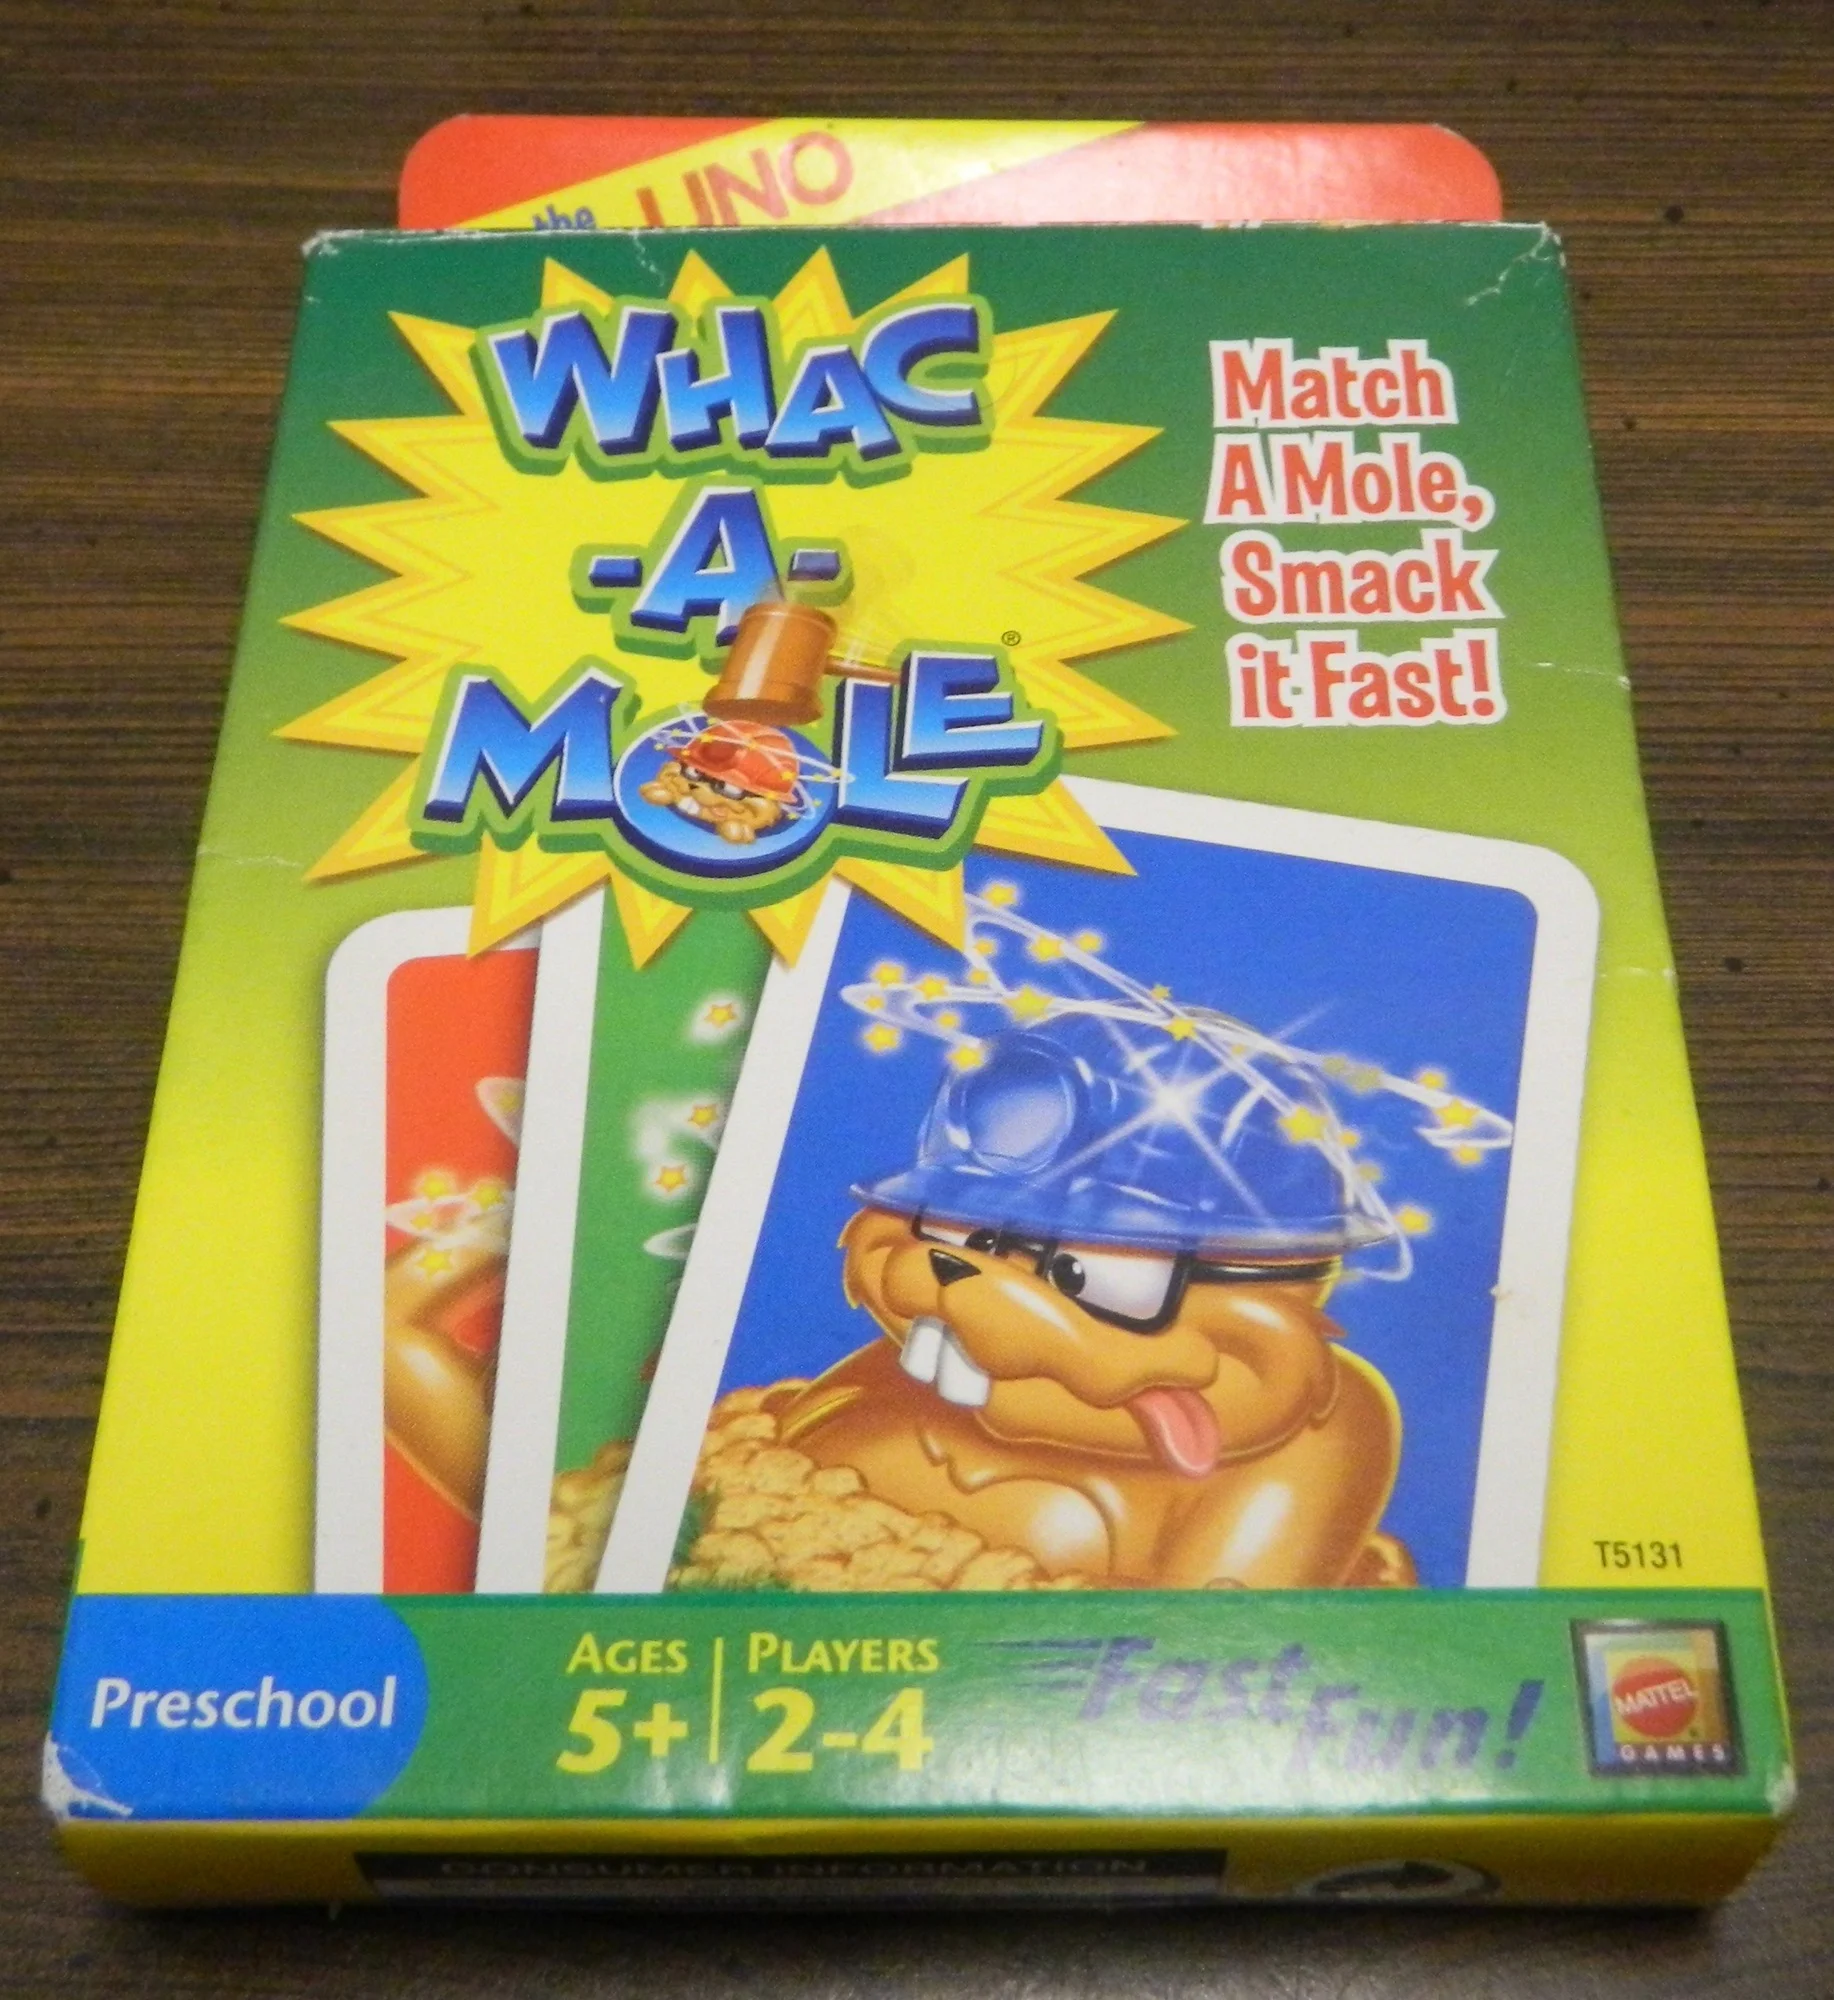 Box for Whac-A-Mole